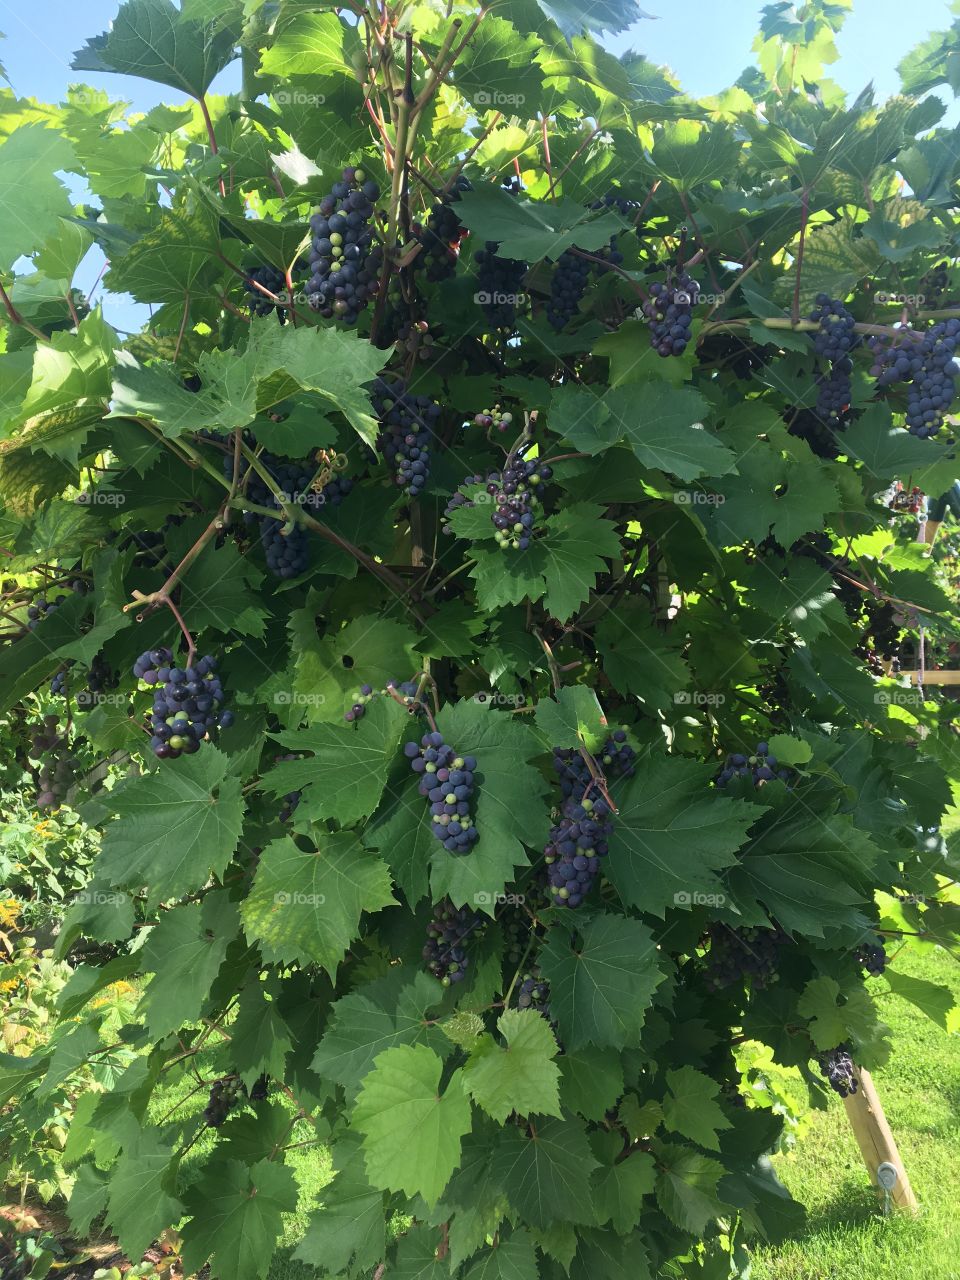 Grapes glorious grapes 🍇